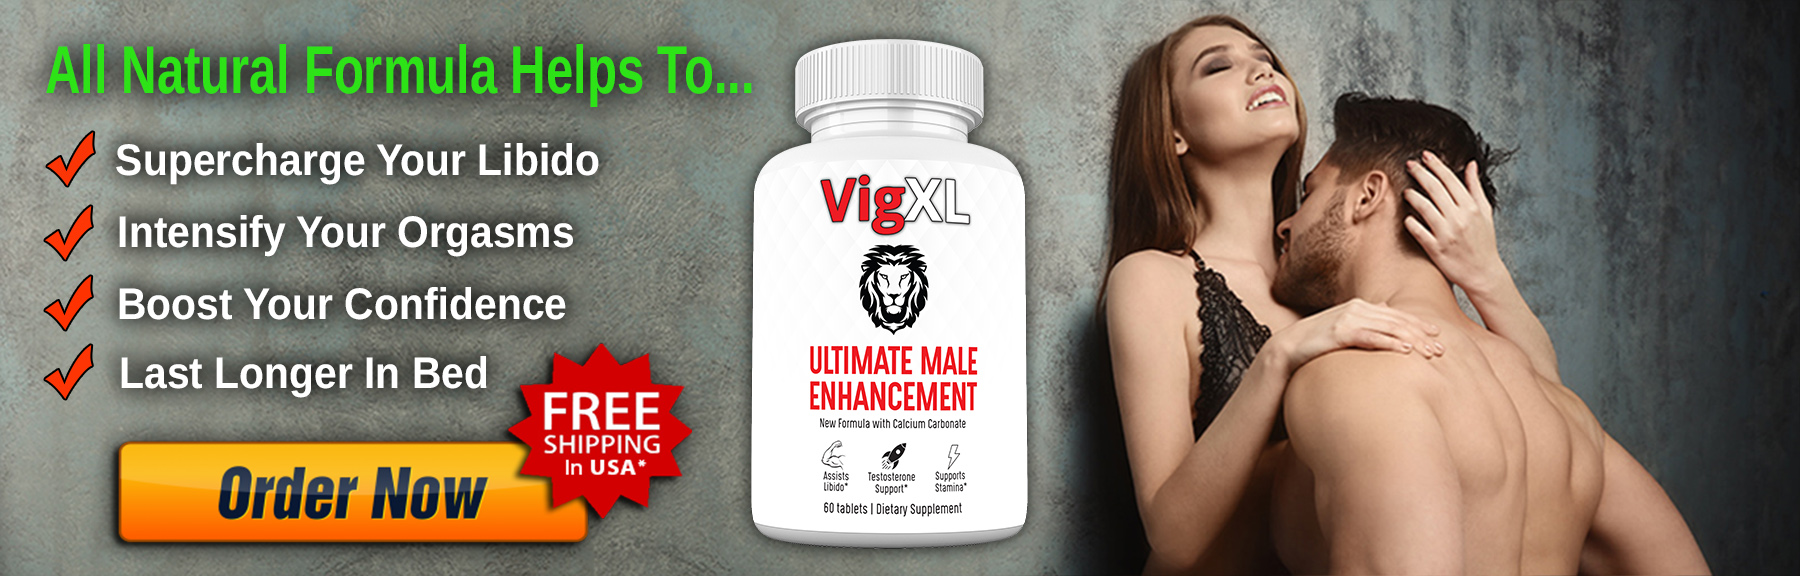 VigXL Ultimate Male Enhancement Natural Supplement For Men